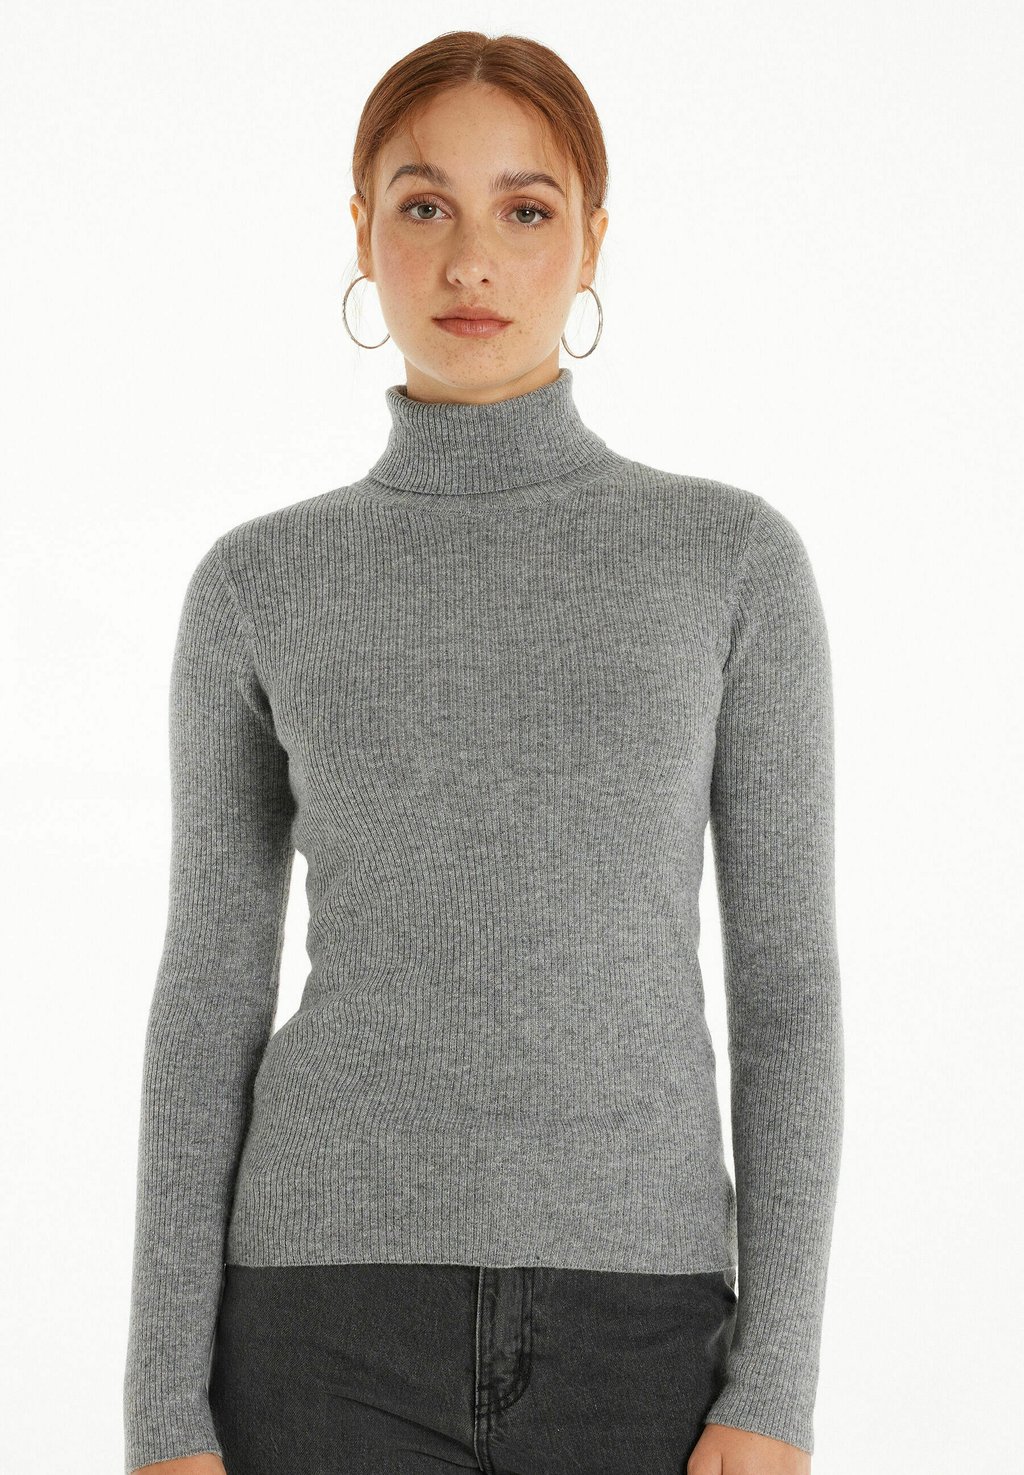 Вязаный свитер Tezenis, цвет grau grey wool blend пальто zara wool blend fitted черный